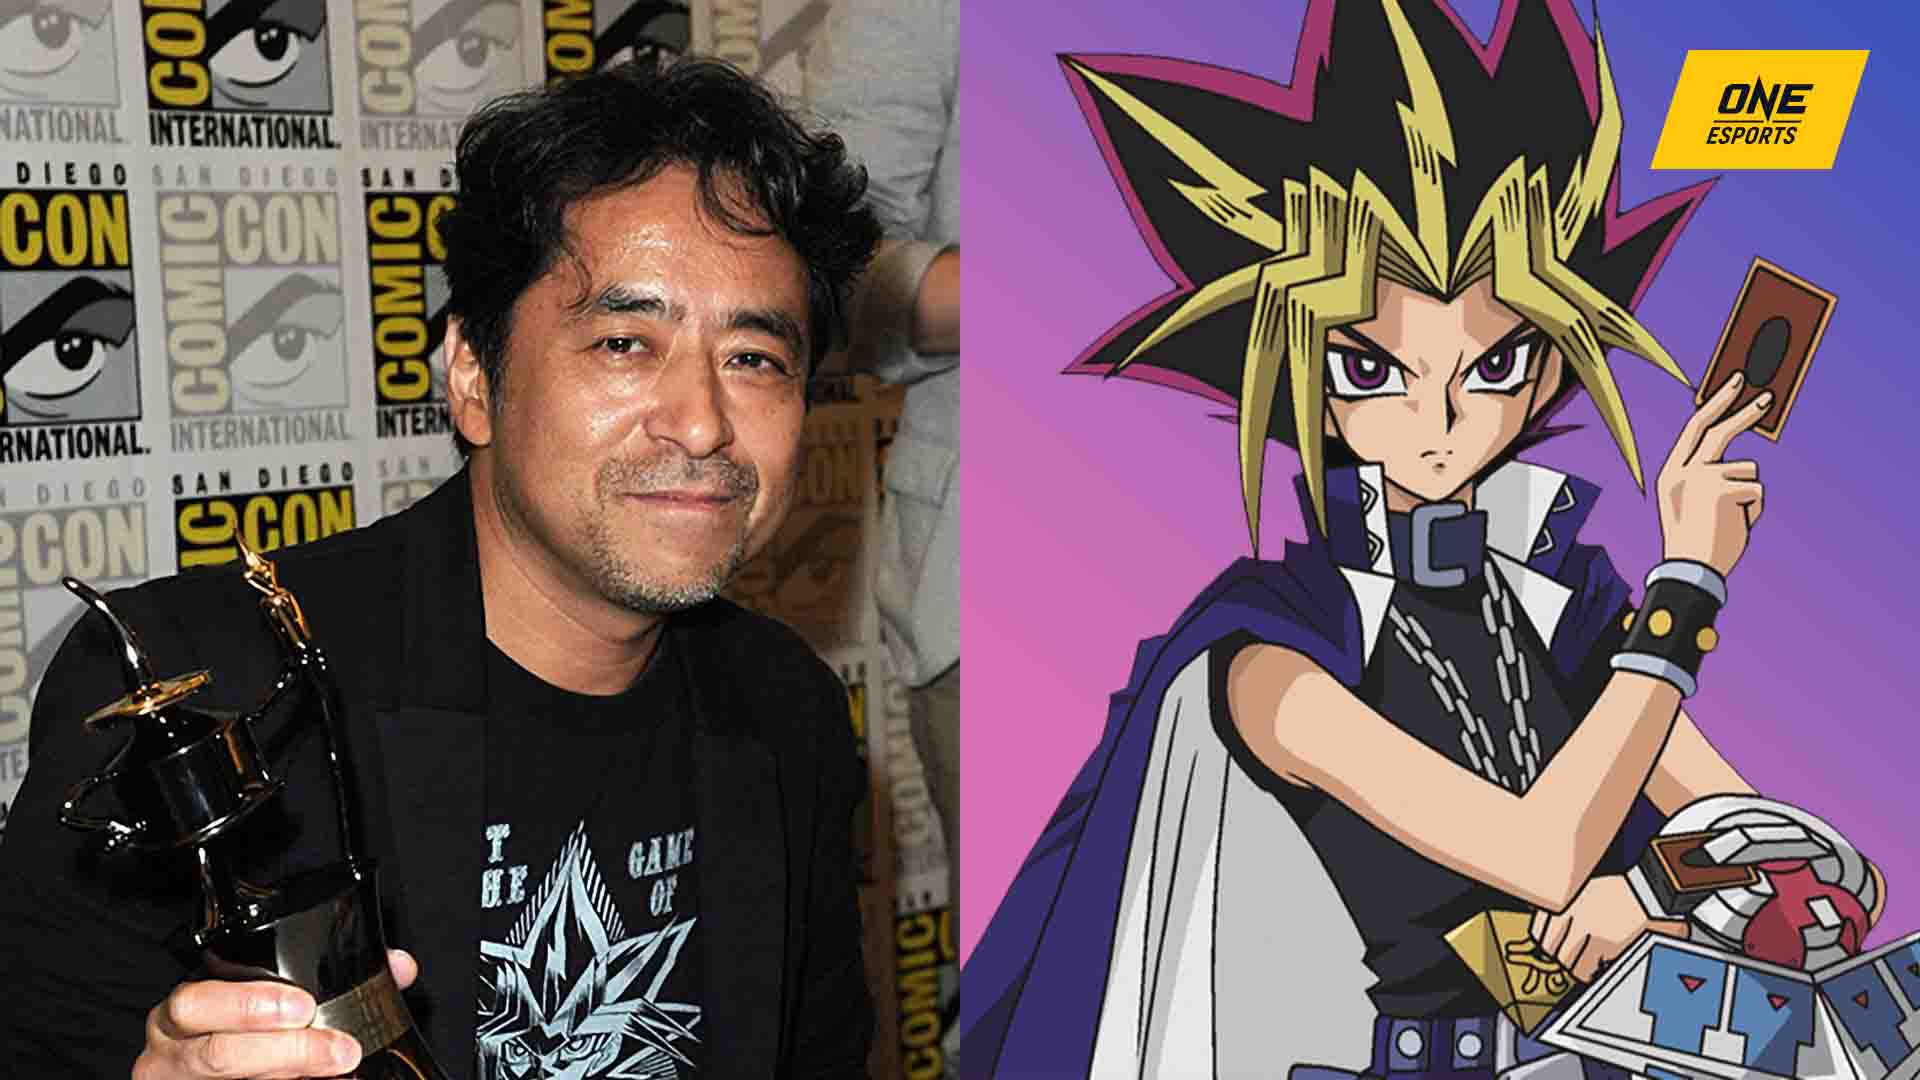 Yu-Gi-Oh creator Kazuki Takahashi died trying to save people | ONE Esports